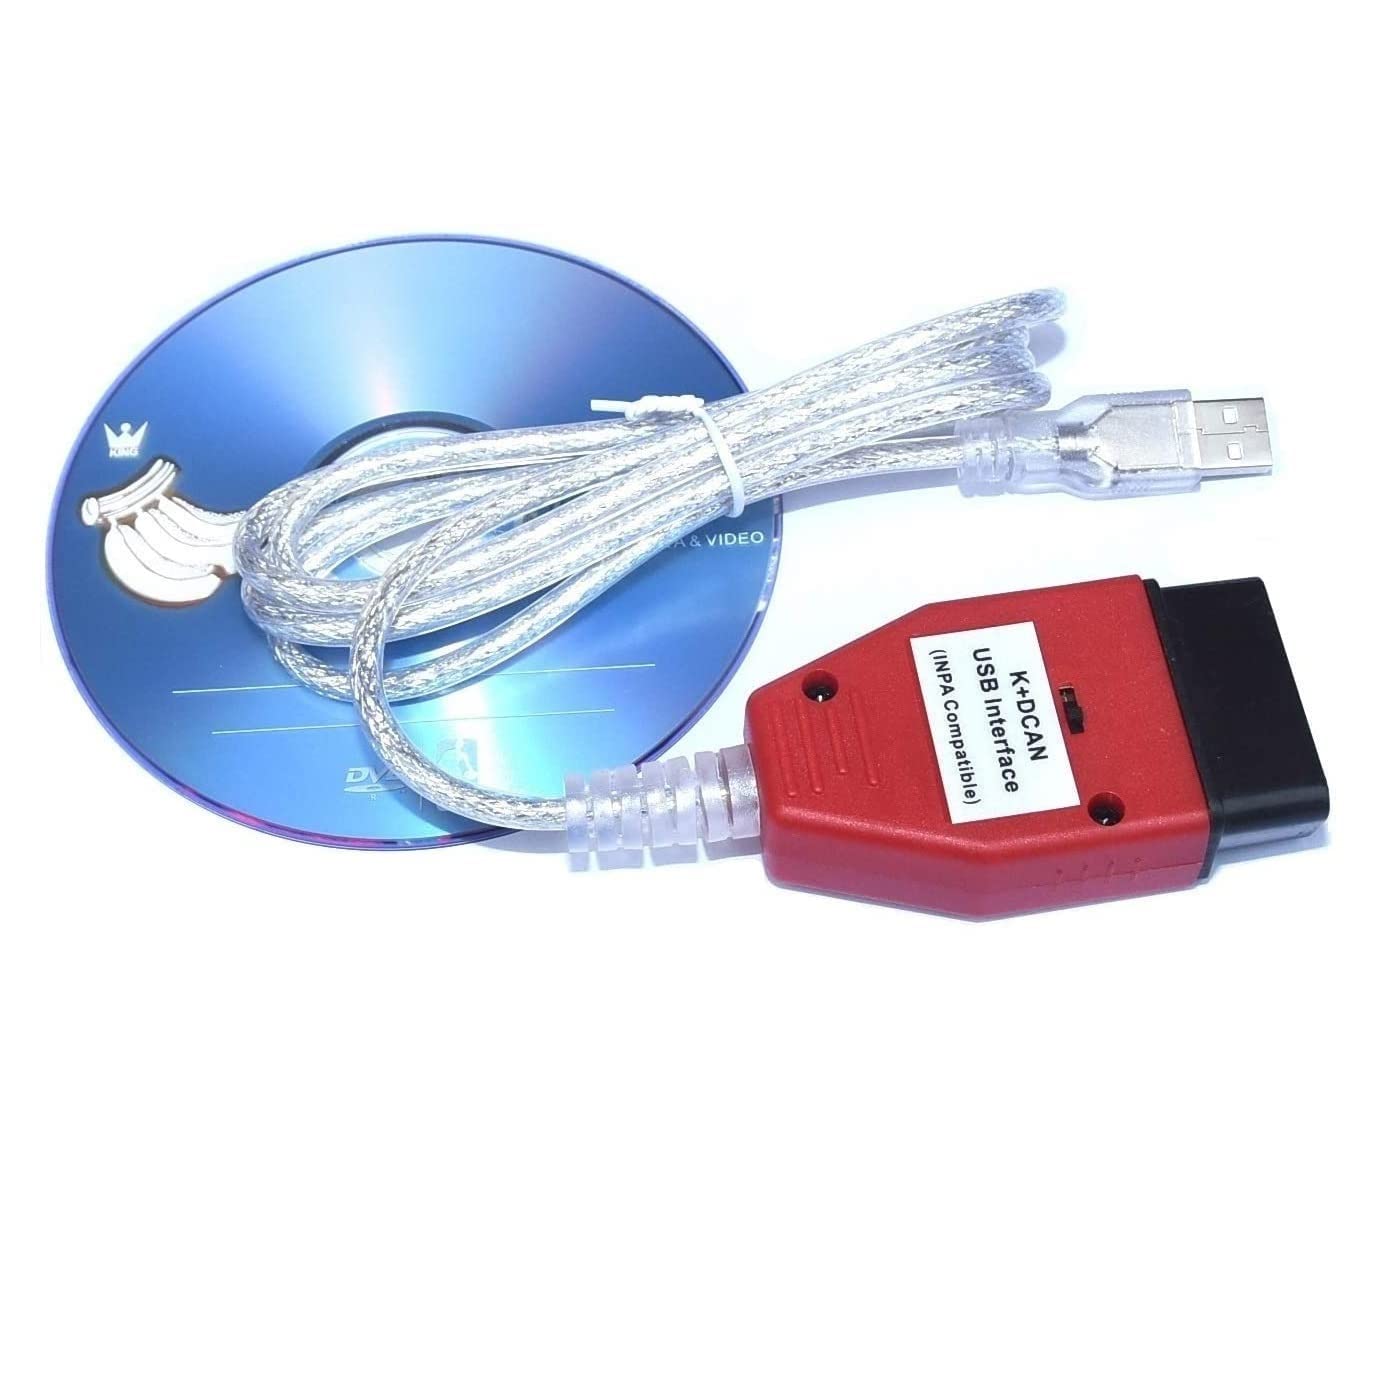 Goldplay DCAN K+ INPA Ediabas Interface OBD2 Diagnose USB Kabel Auto Diagnose für R56 E87 E93 E70 von AntiBreak